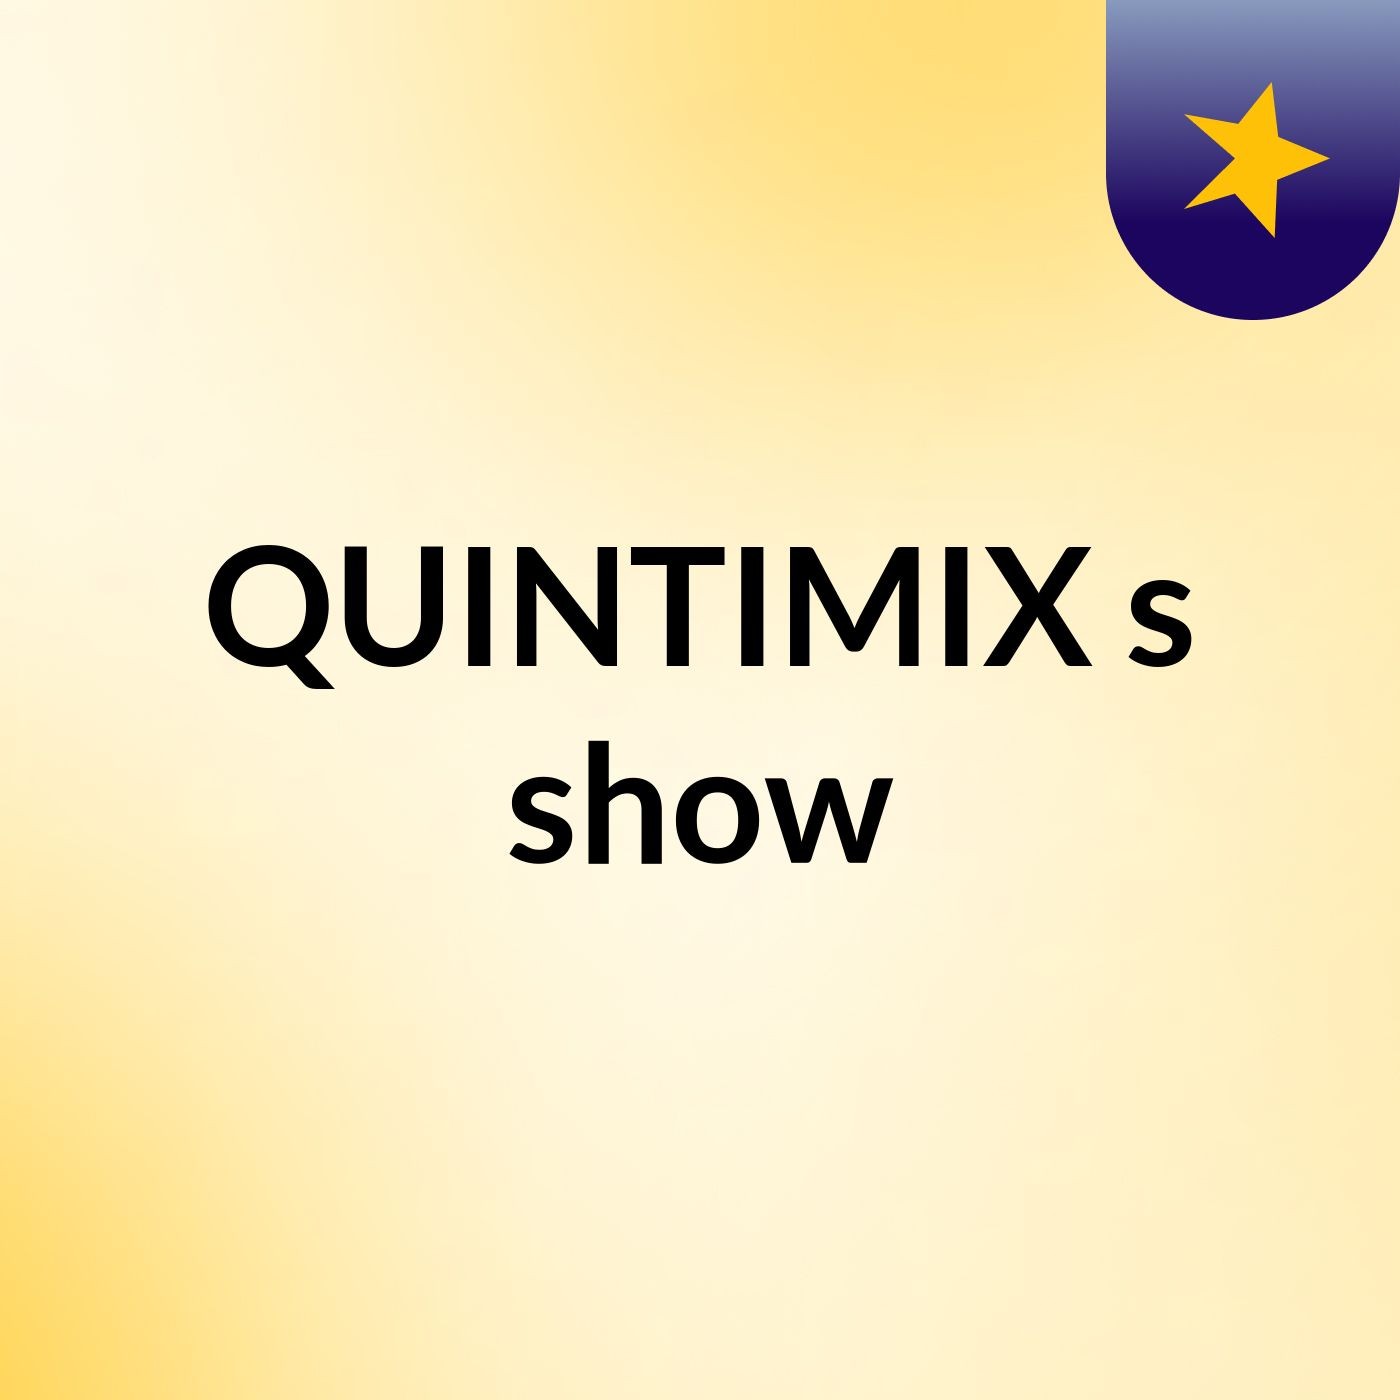 QUINTIMIX's show